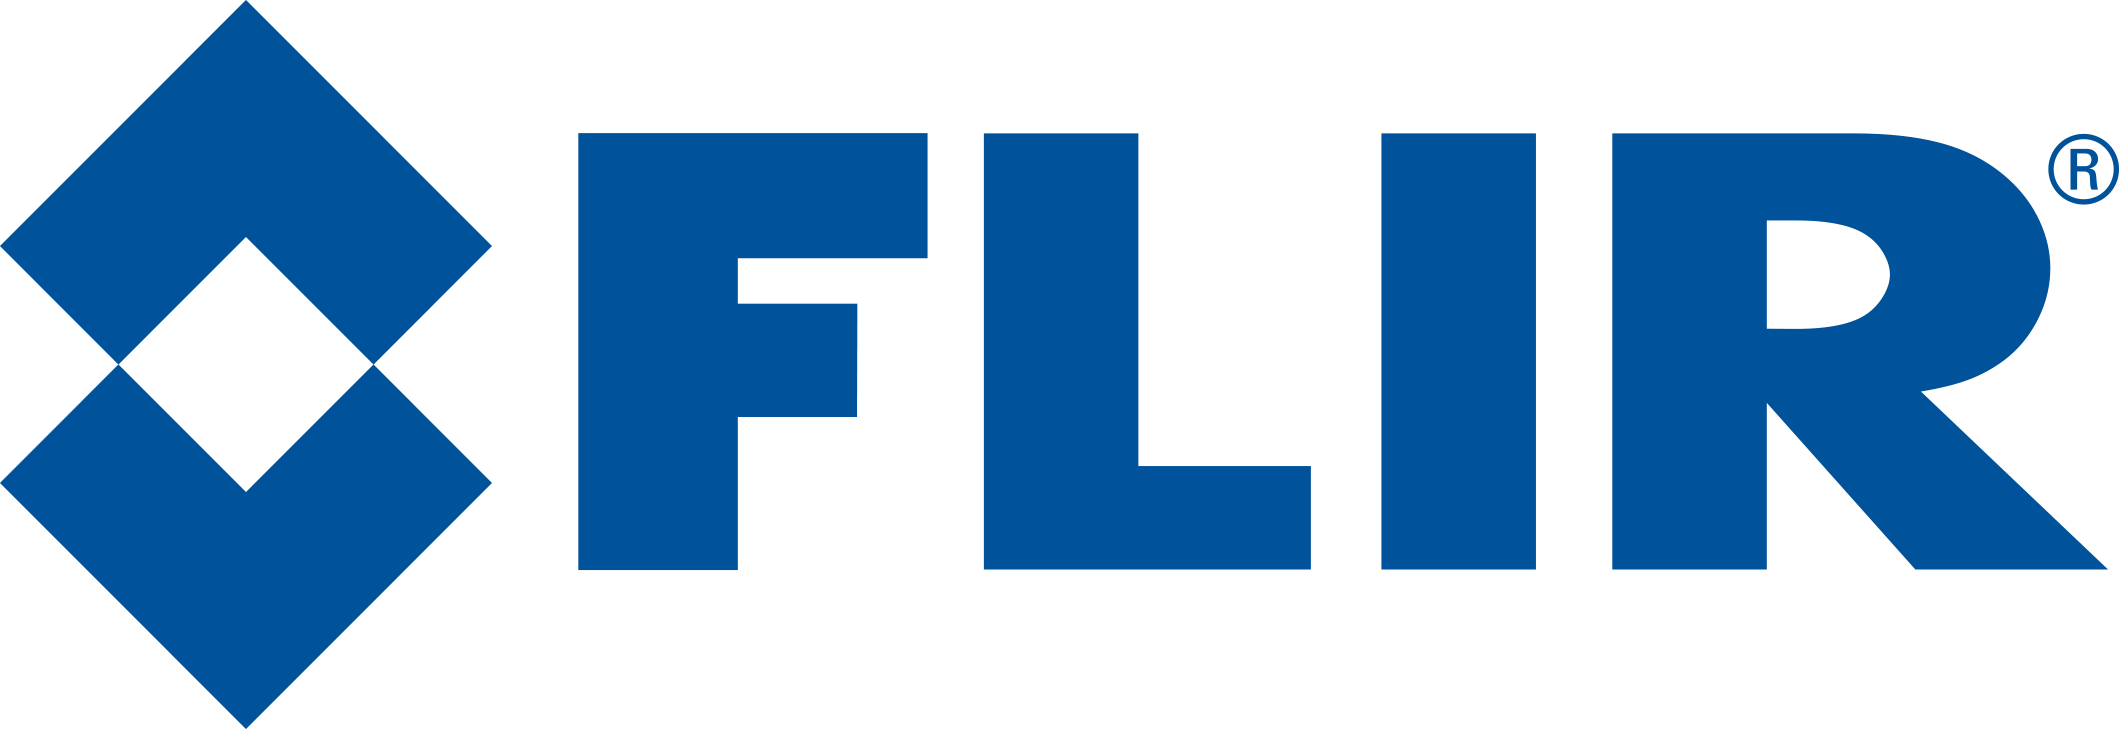 FLIR Integrated Imaging Solutions, Inc. LOGO